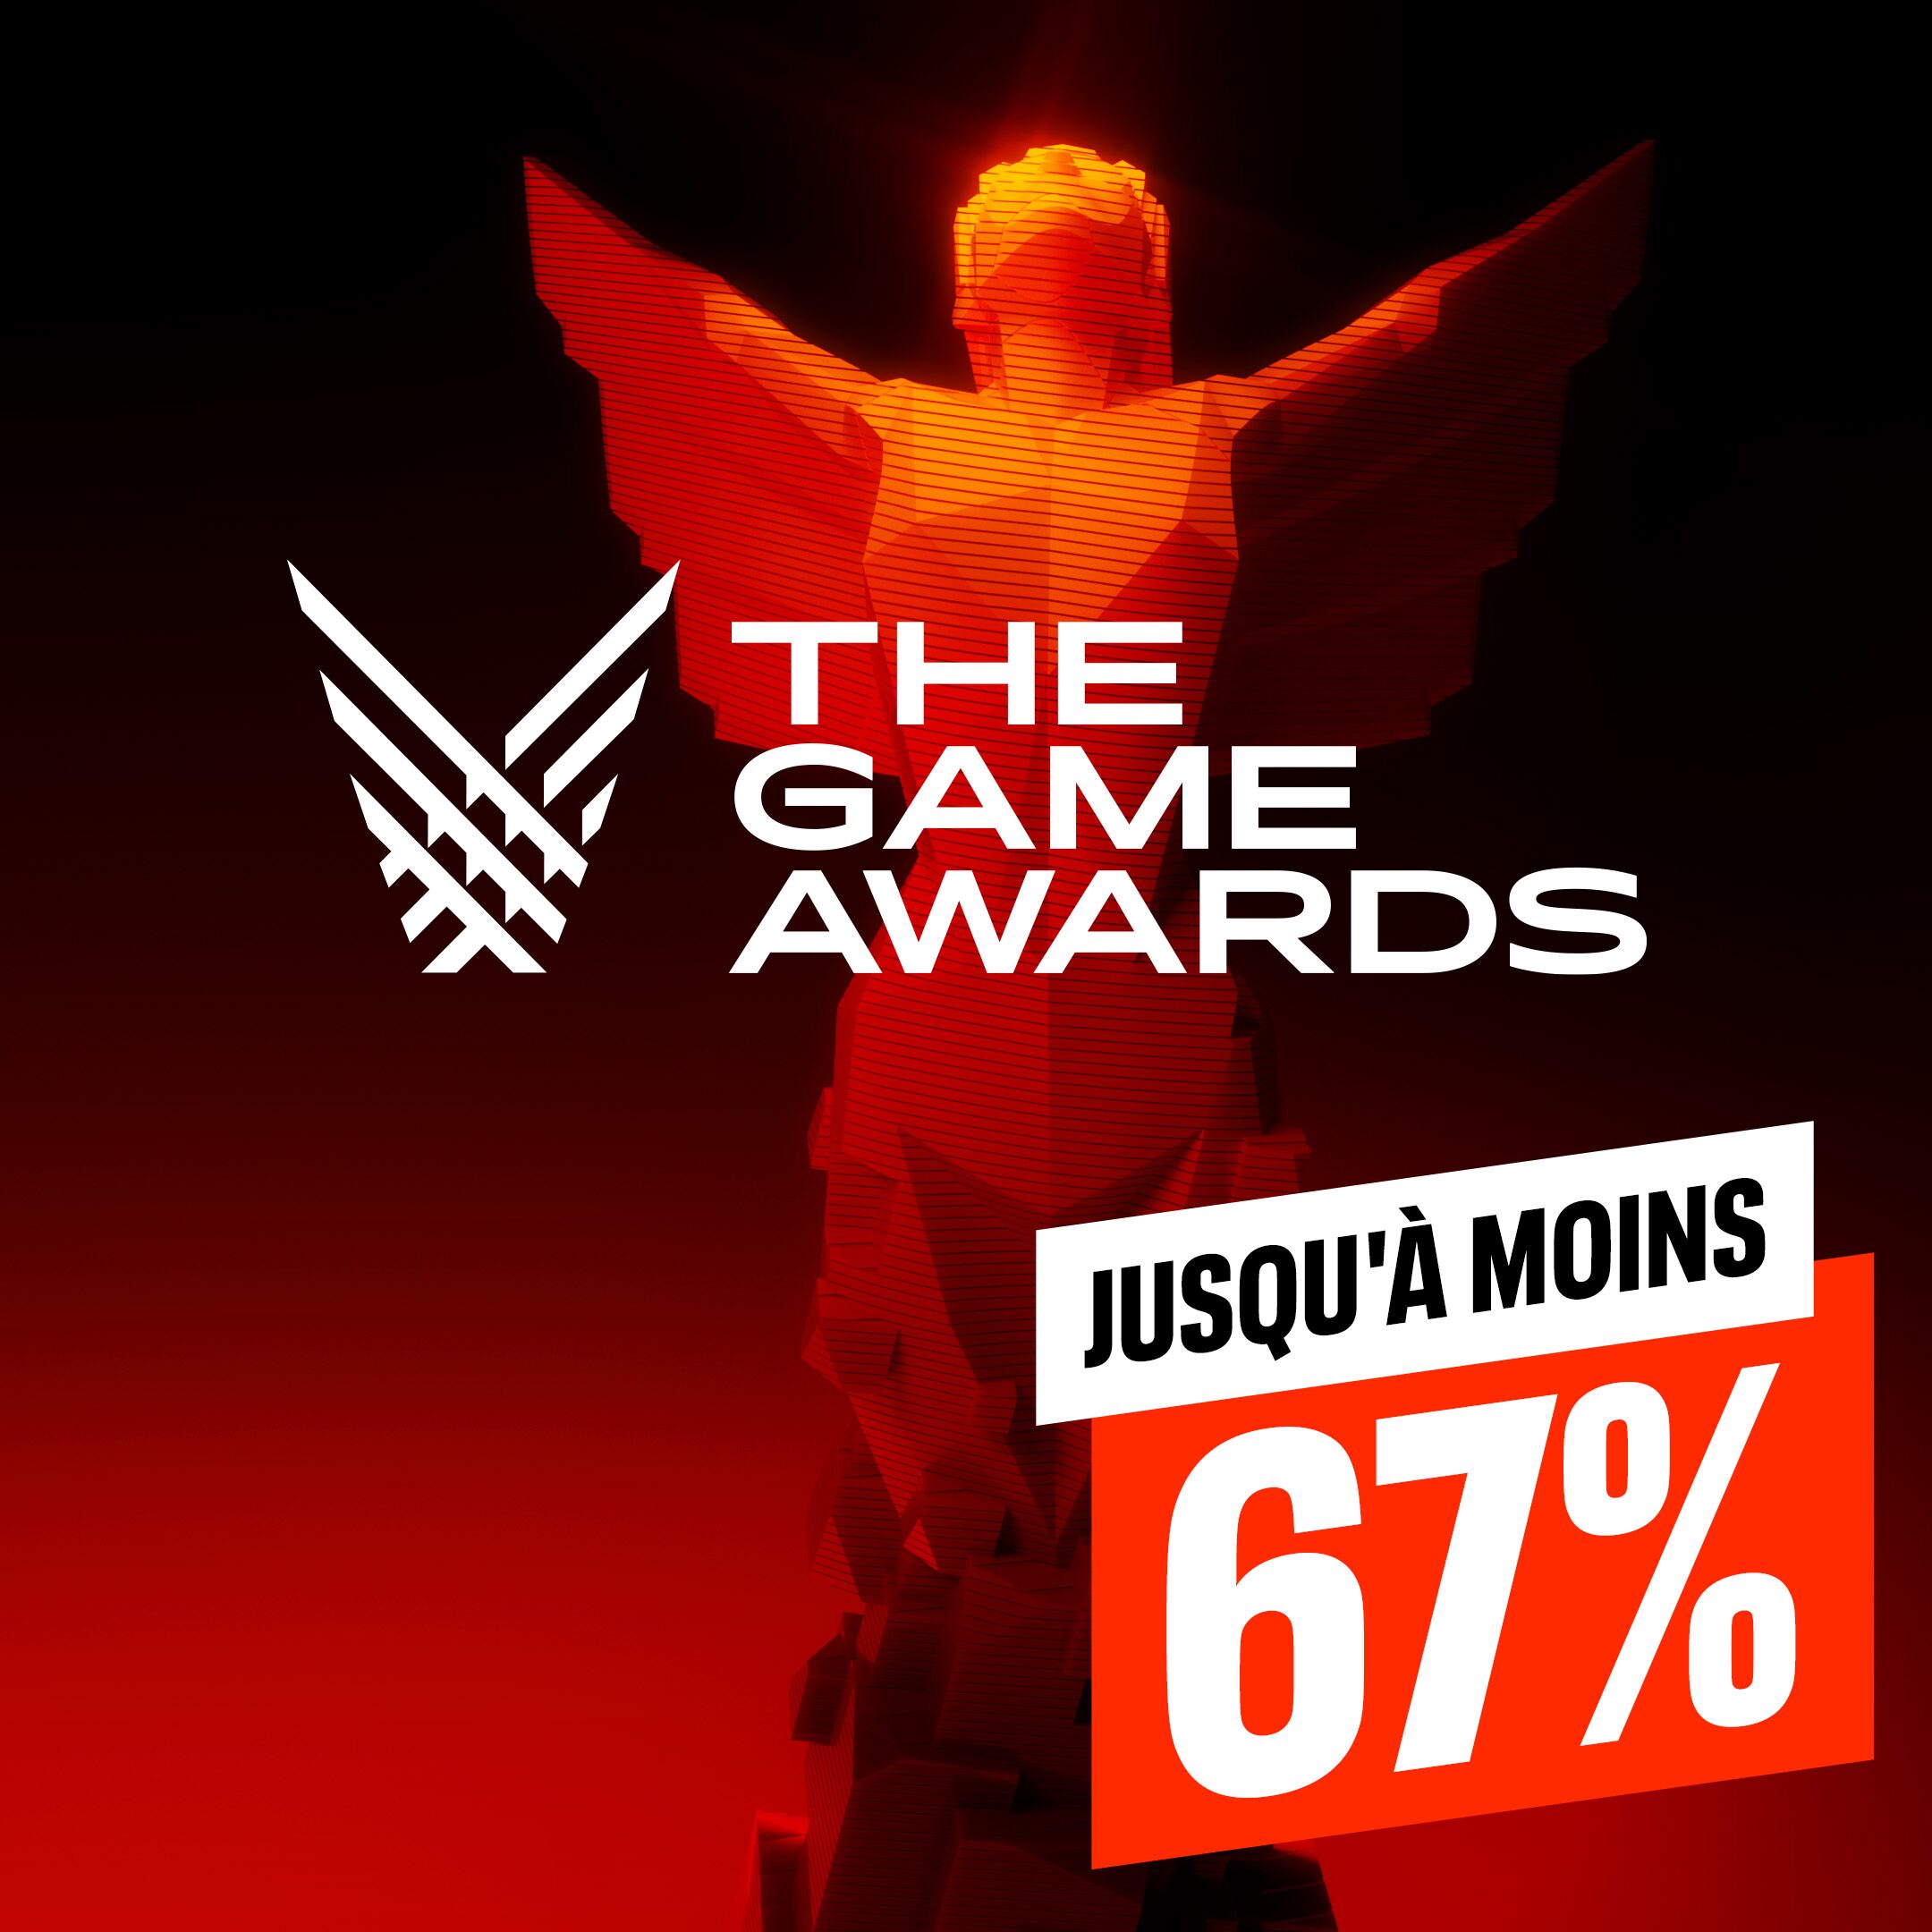 [PROMO] The Game Awards